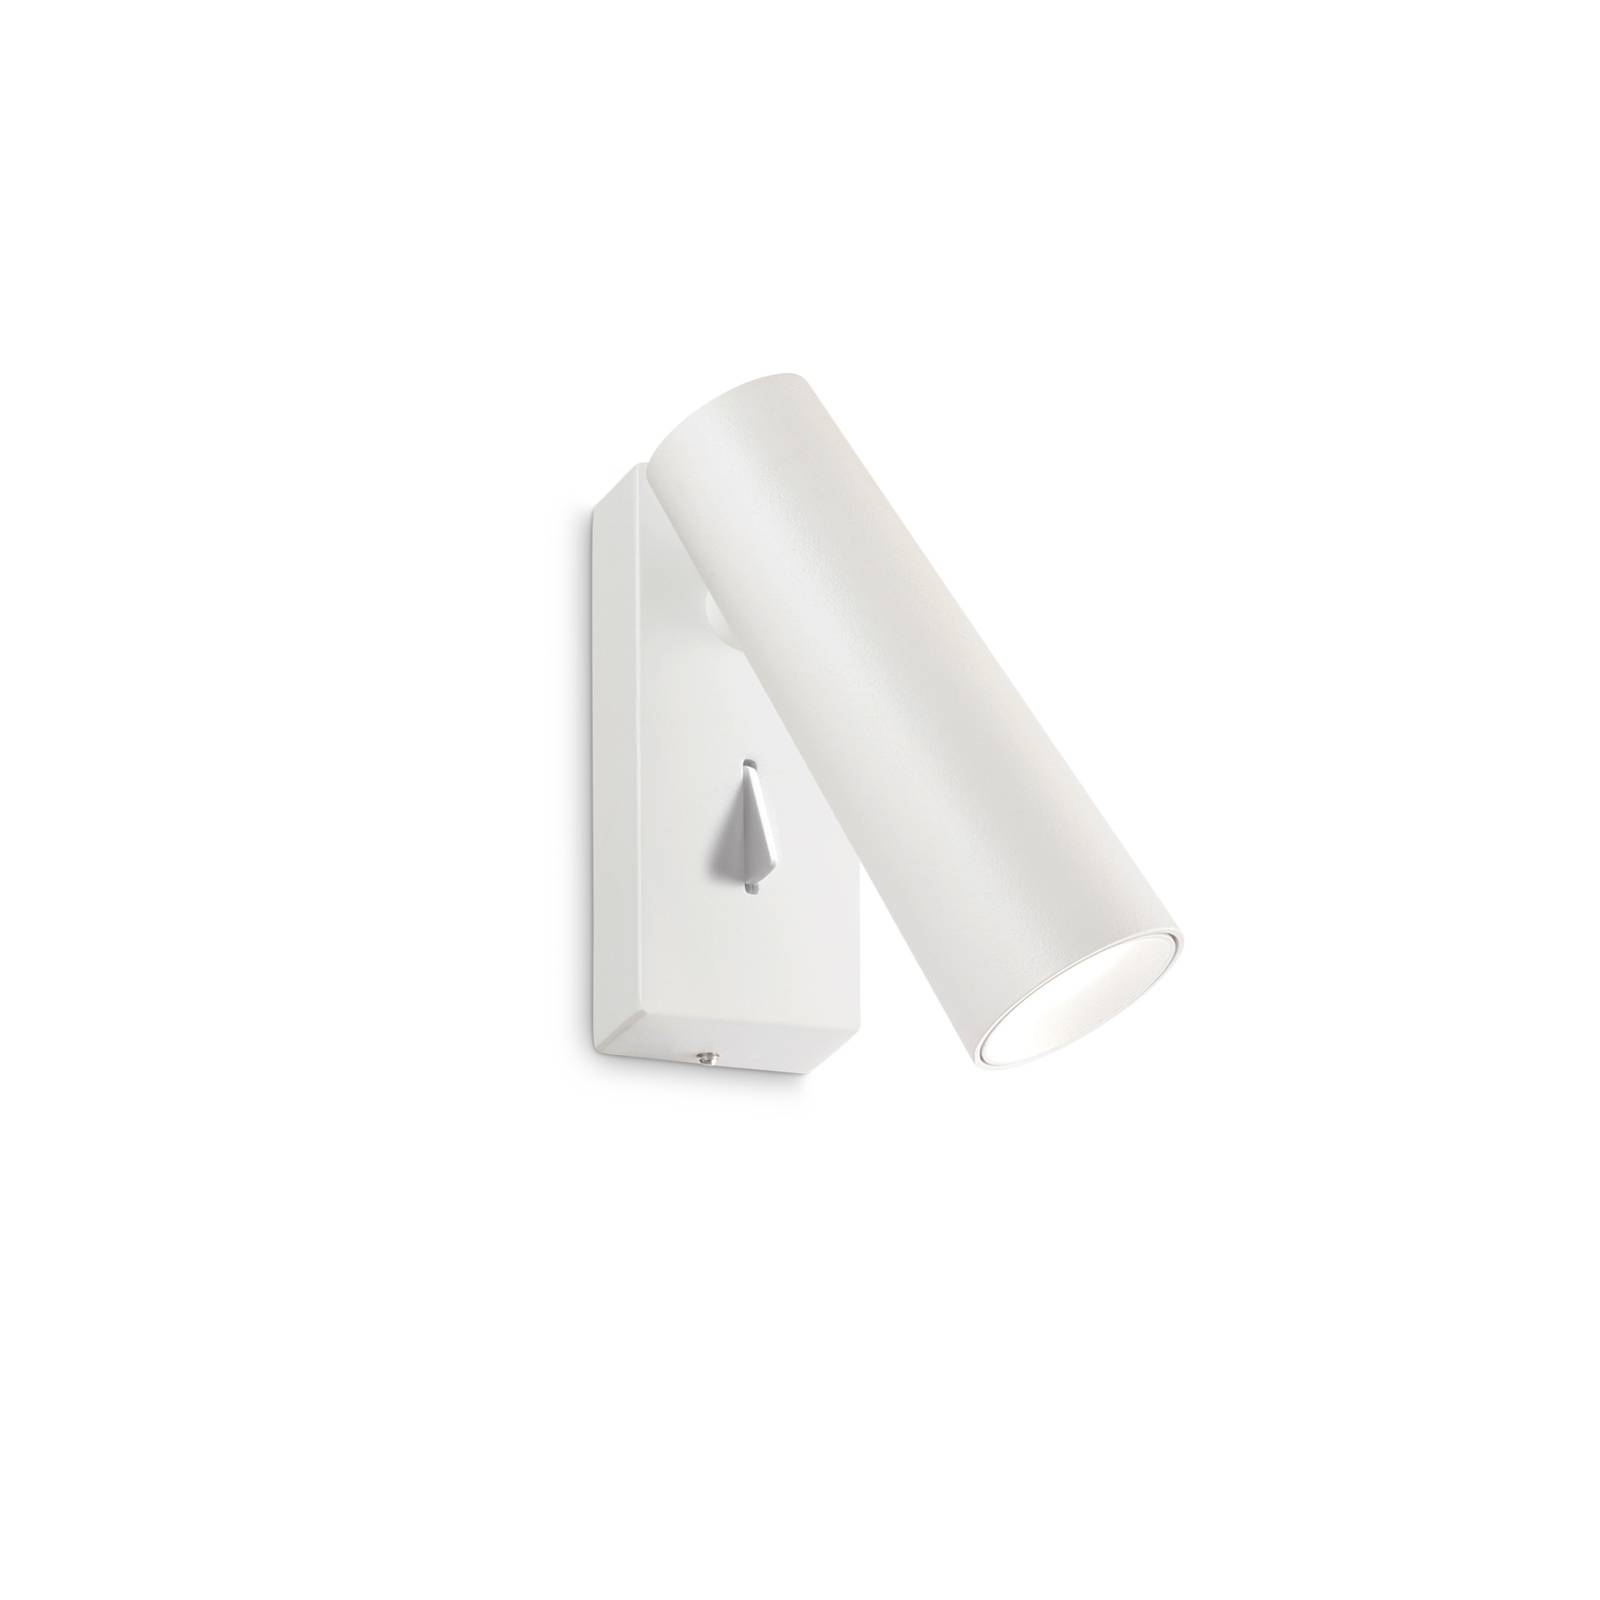 Ideallux Ideal Lux Pipe LED-Wandlampe, verstellbar weiß